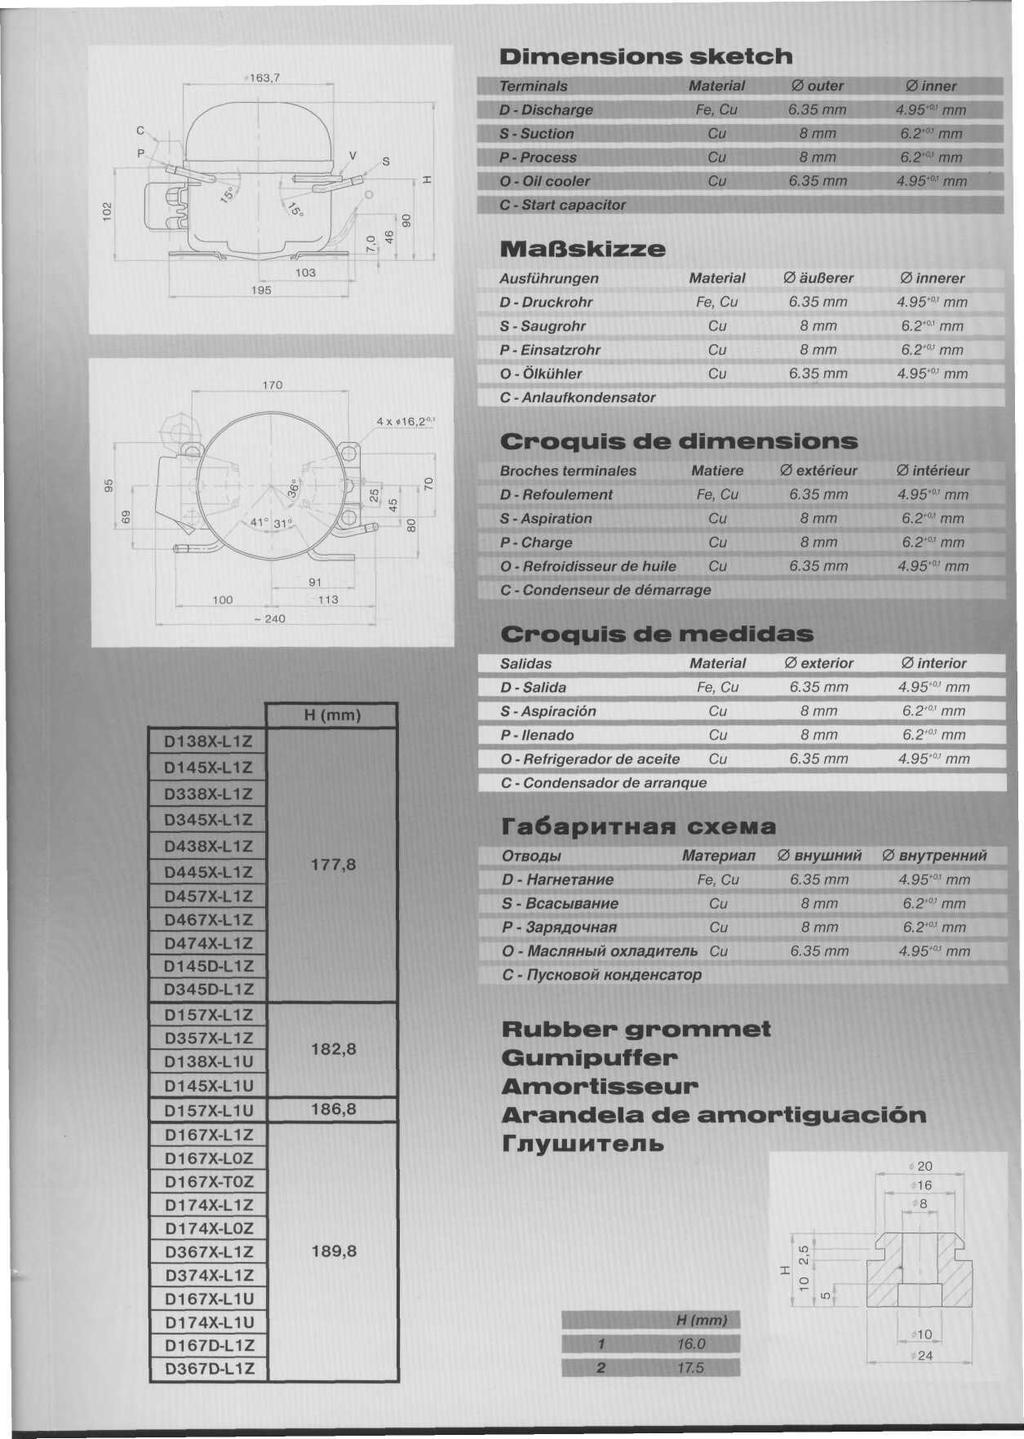 163,7 Dimensions sketch Terminals 0 outer D - Discharge - uction P - Process О - Oil coole, С - tart capacitor MaBskizze Ausfuhrungen D - Druckrohr - augrohr P - Einsatzrohr О - Olkuhler С -